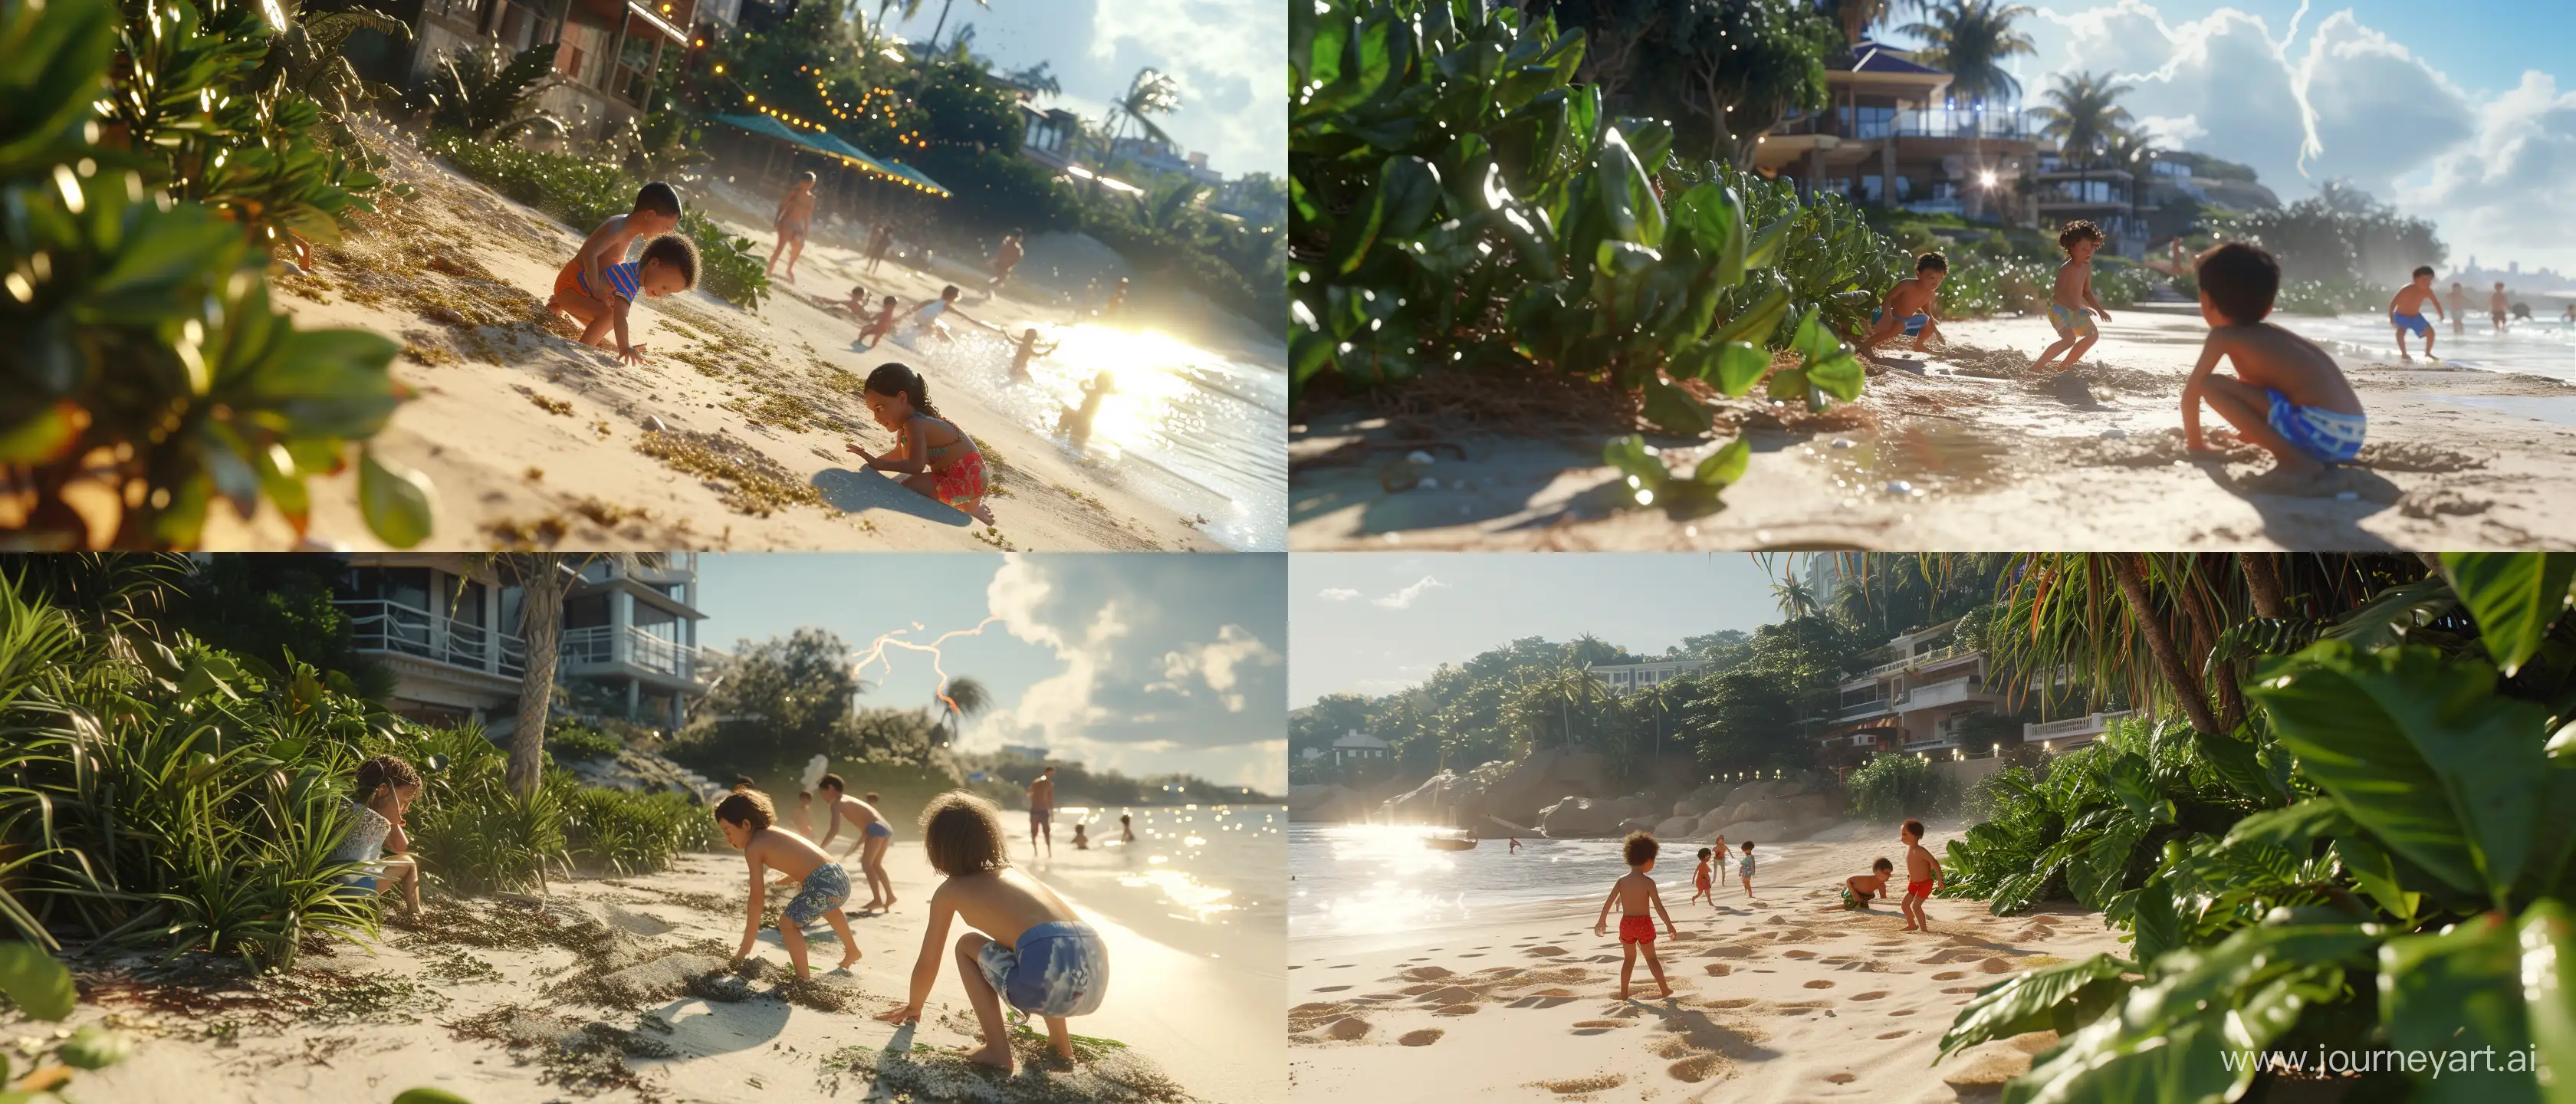 Joyful-Childrens-Beach-Play-in-HyperRealistic-Cinematic-Style